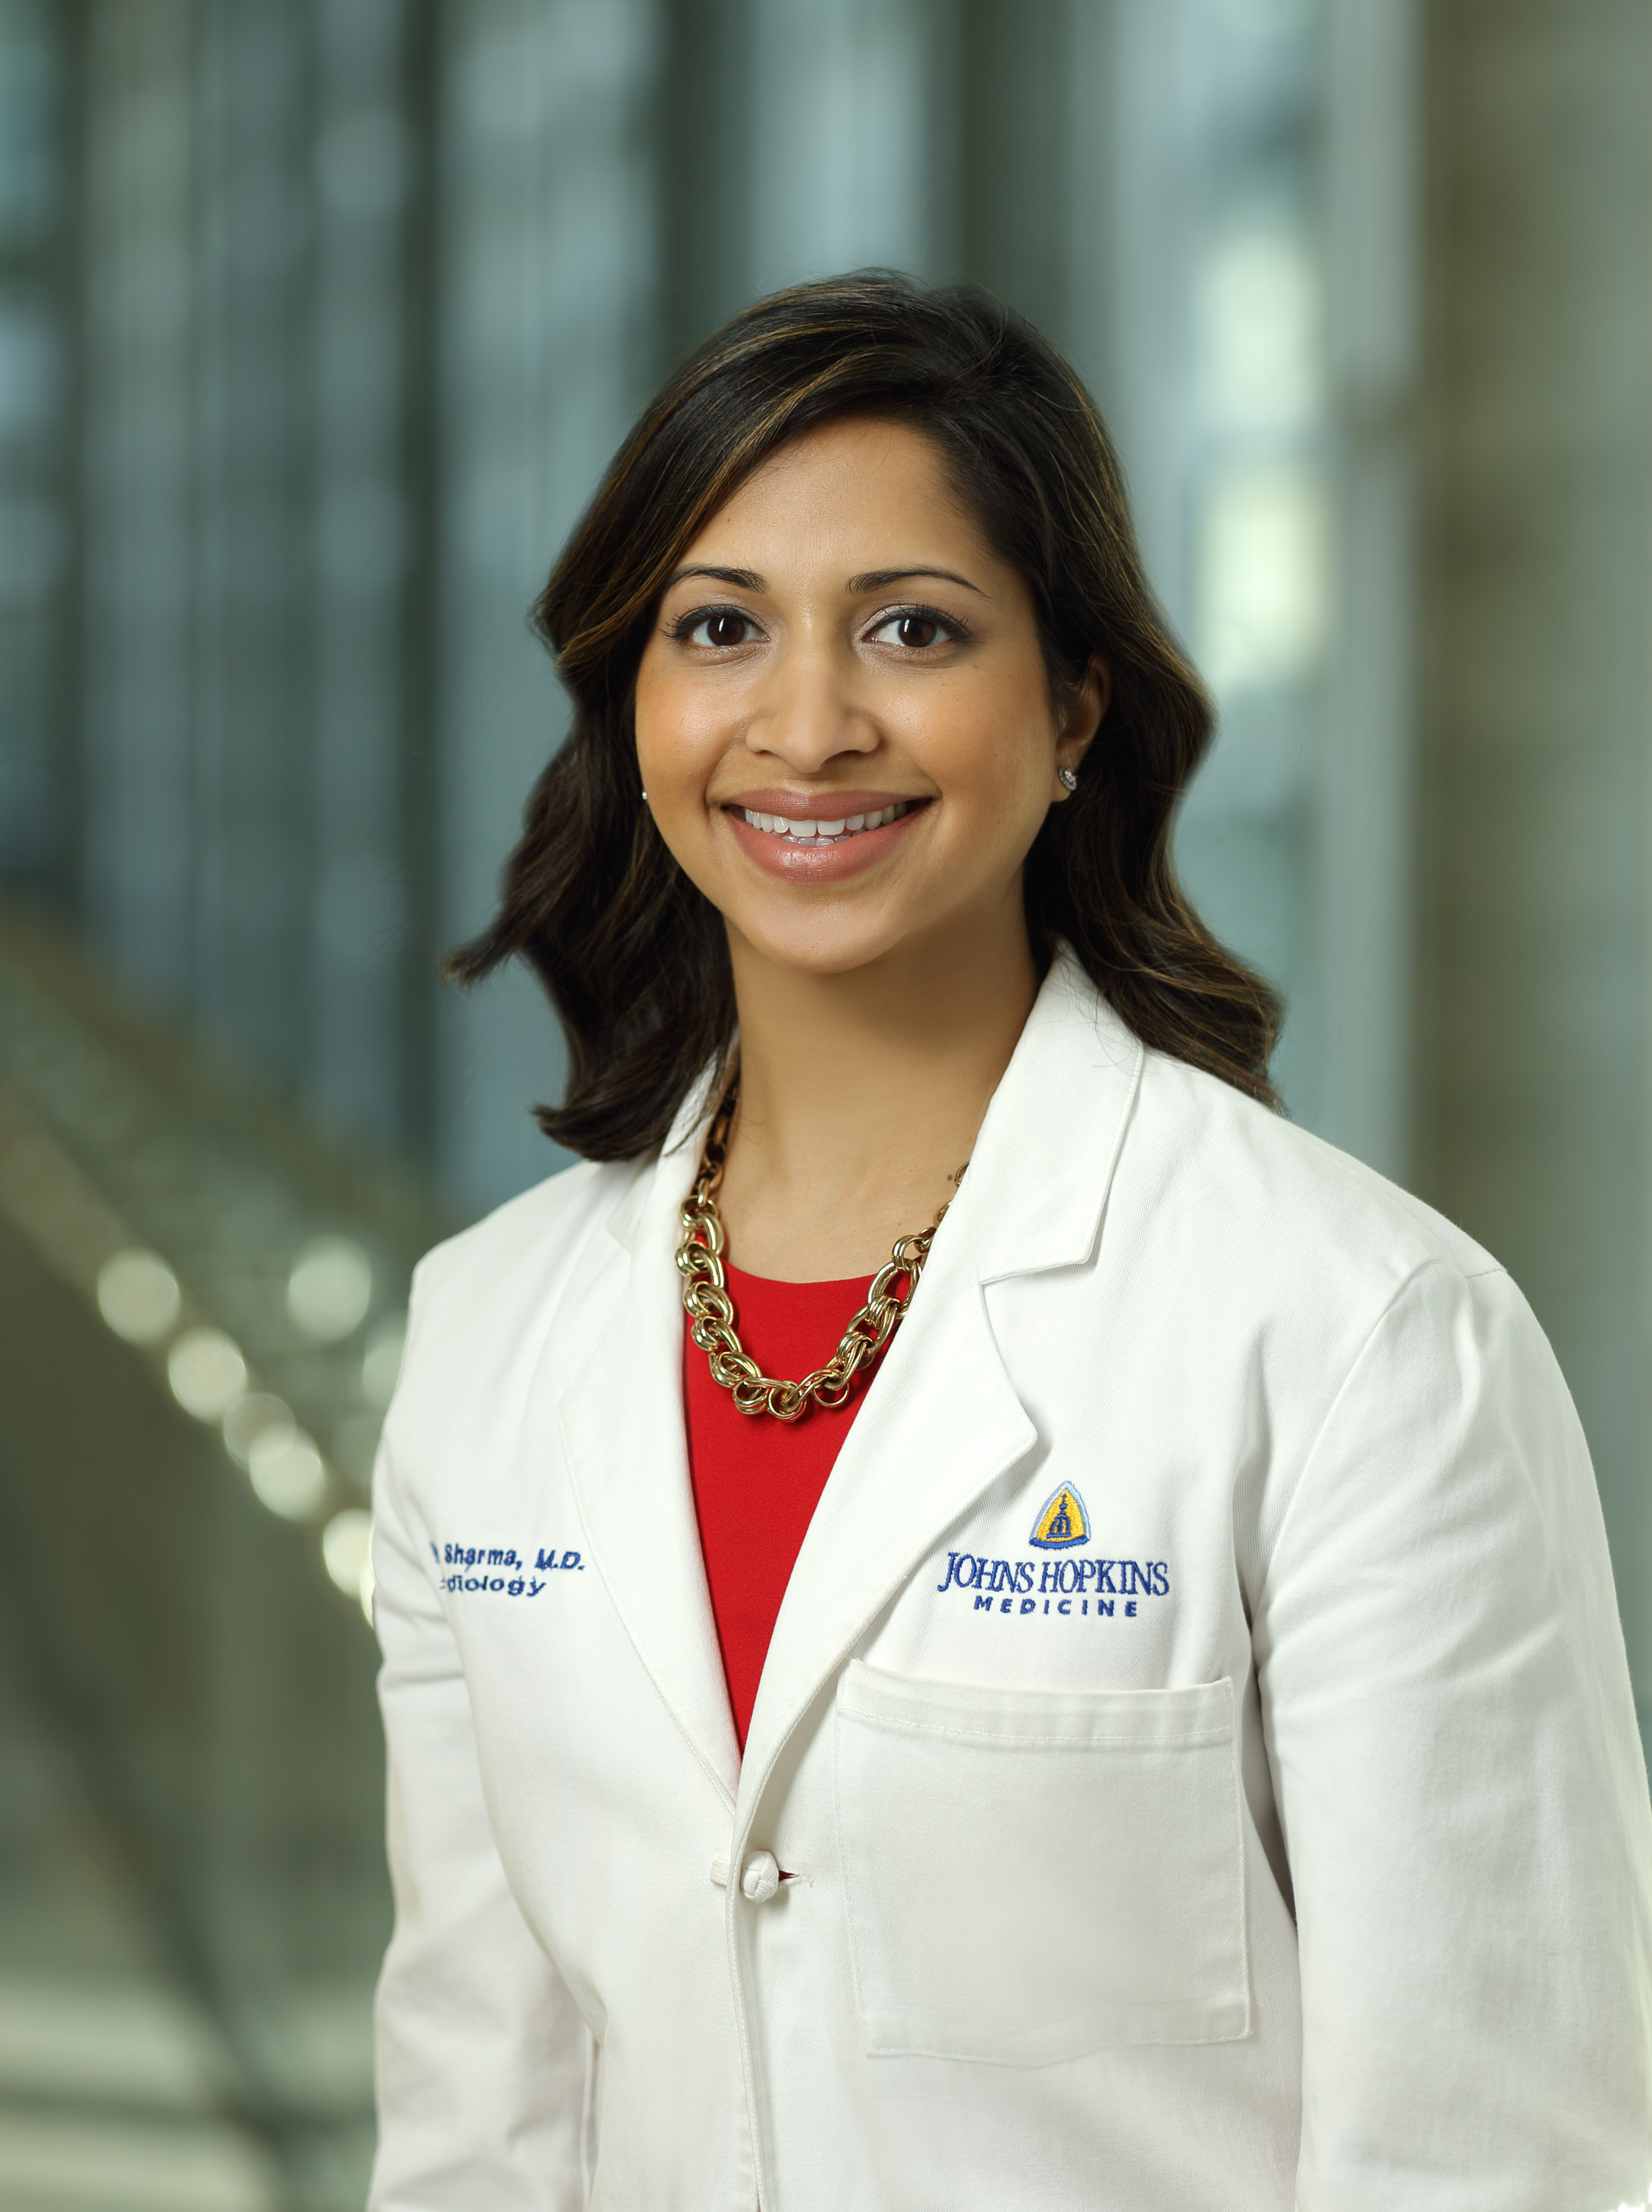 Kavita Sharma, smiling, in formal portrait while wearing medical white coat.